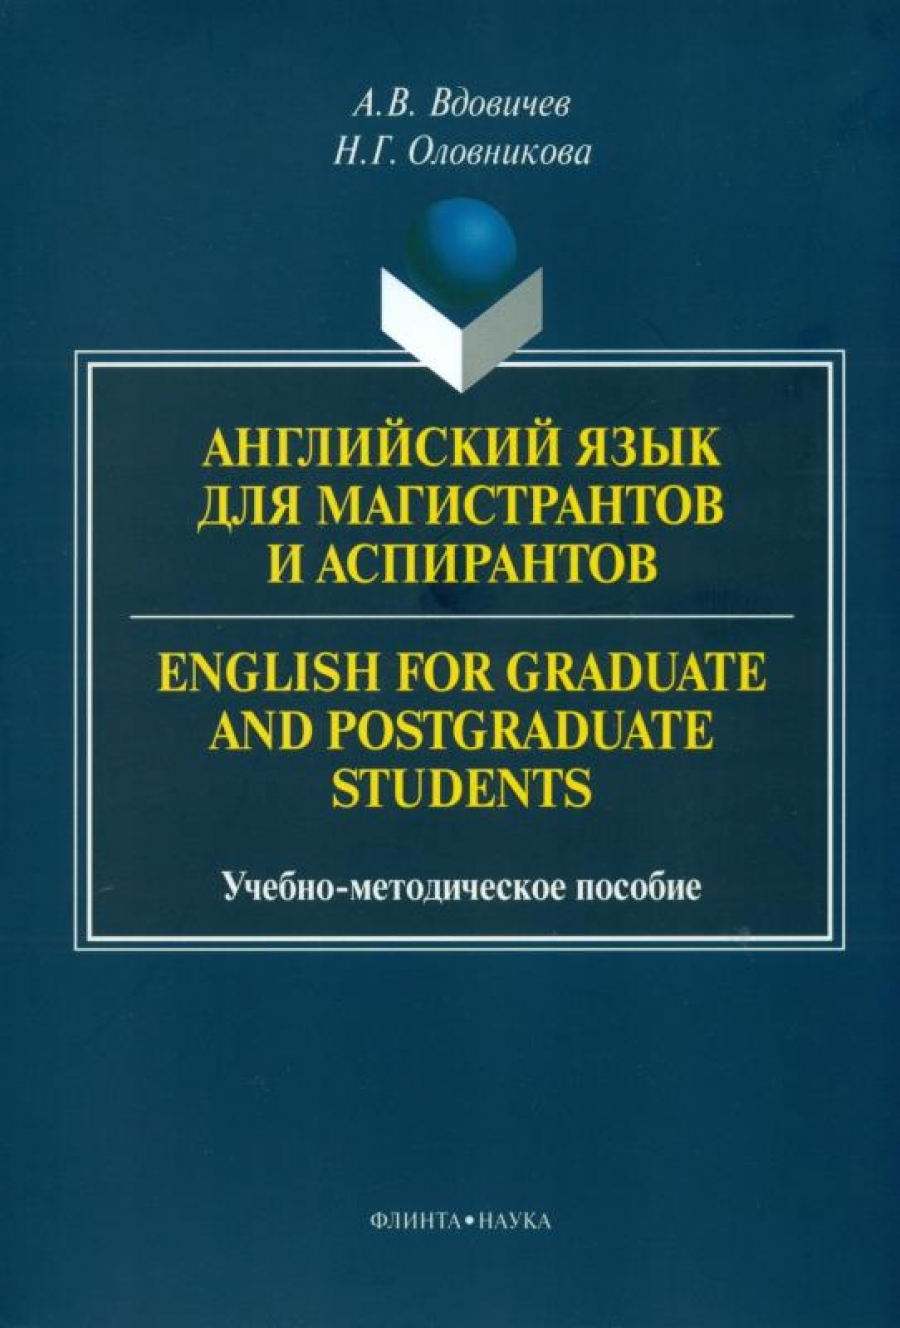  ..,  ..      . English for Graduate and Postgraduate Students : .-.  